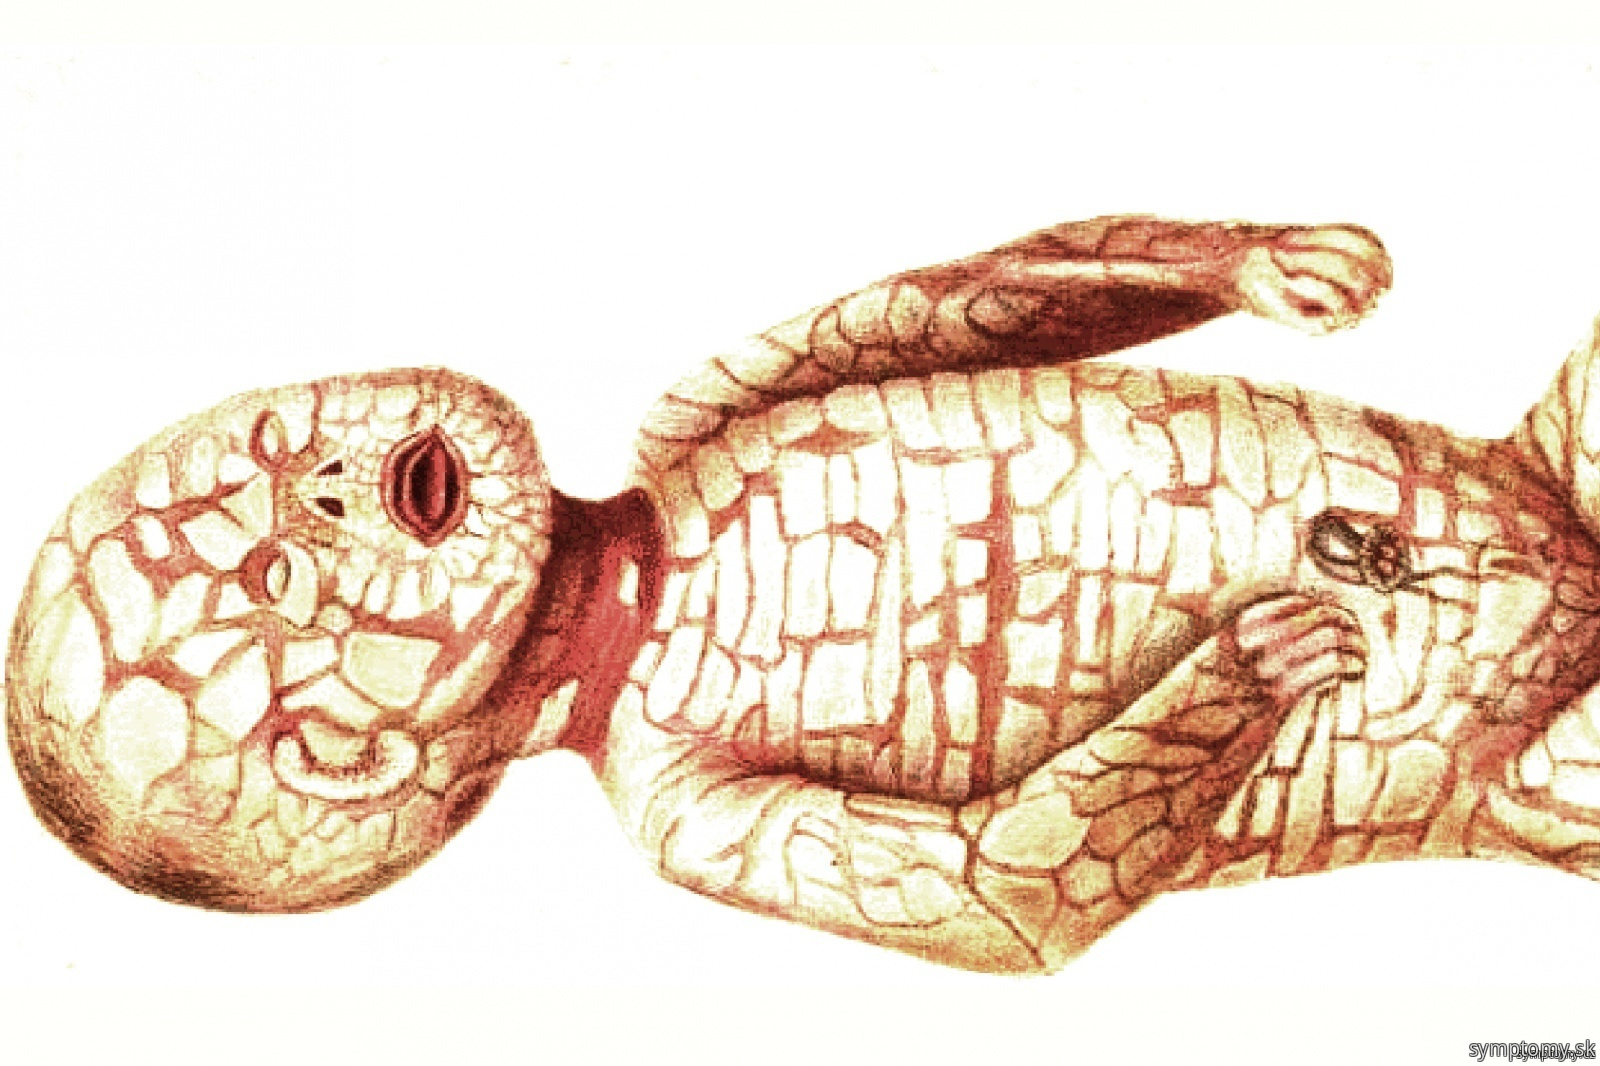 Harlequin ichthyosis